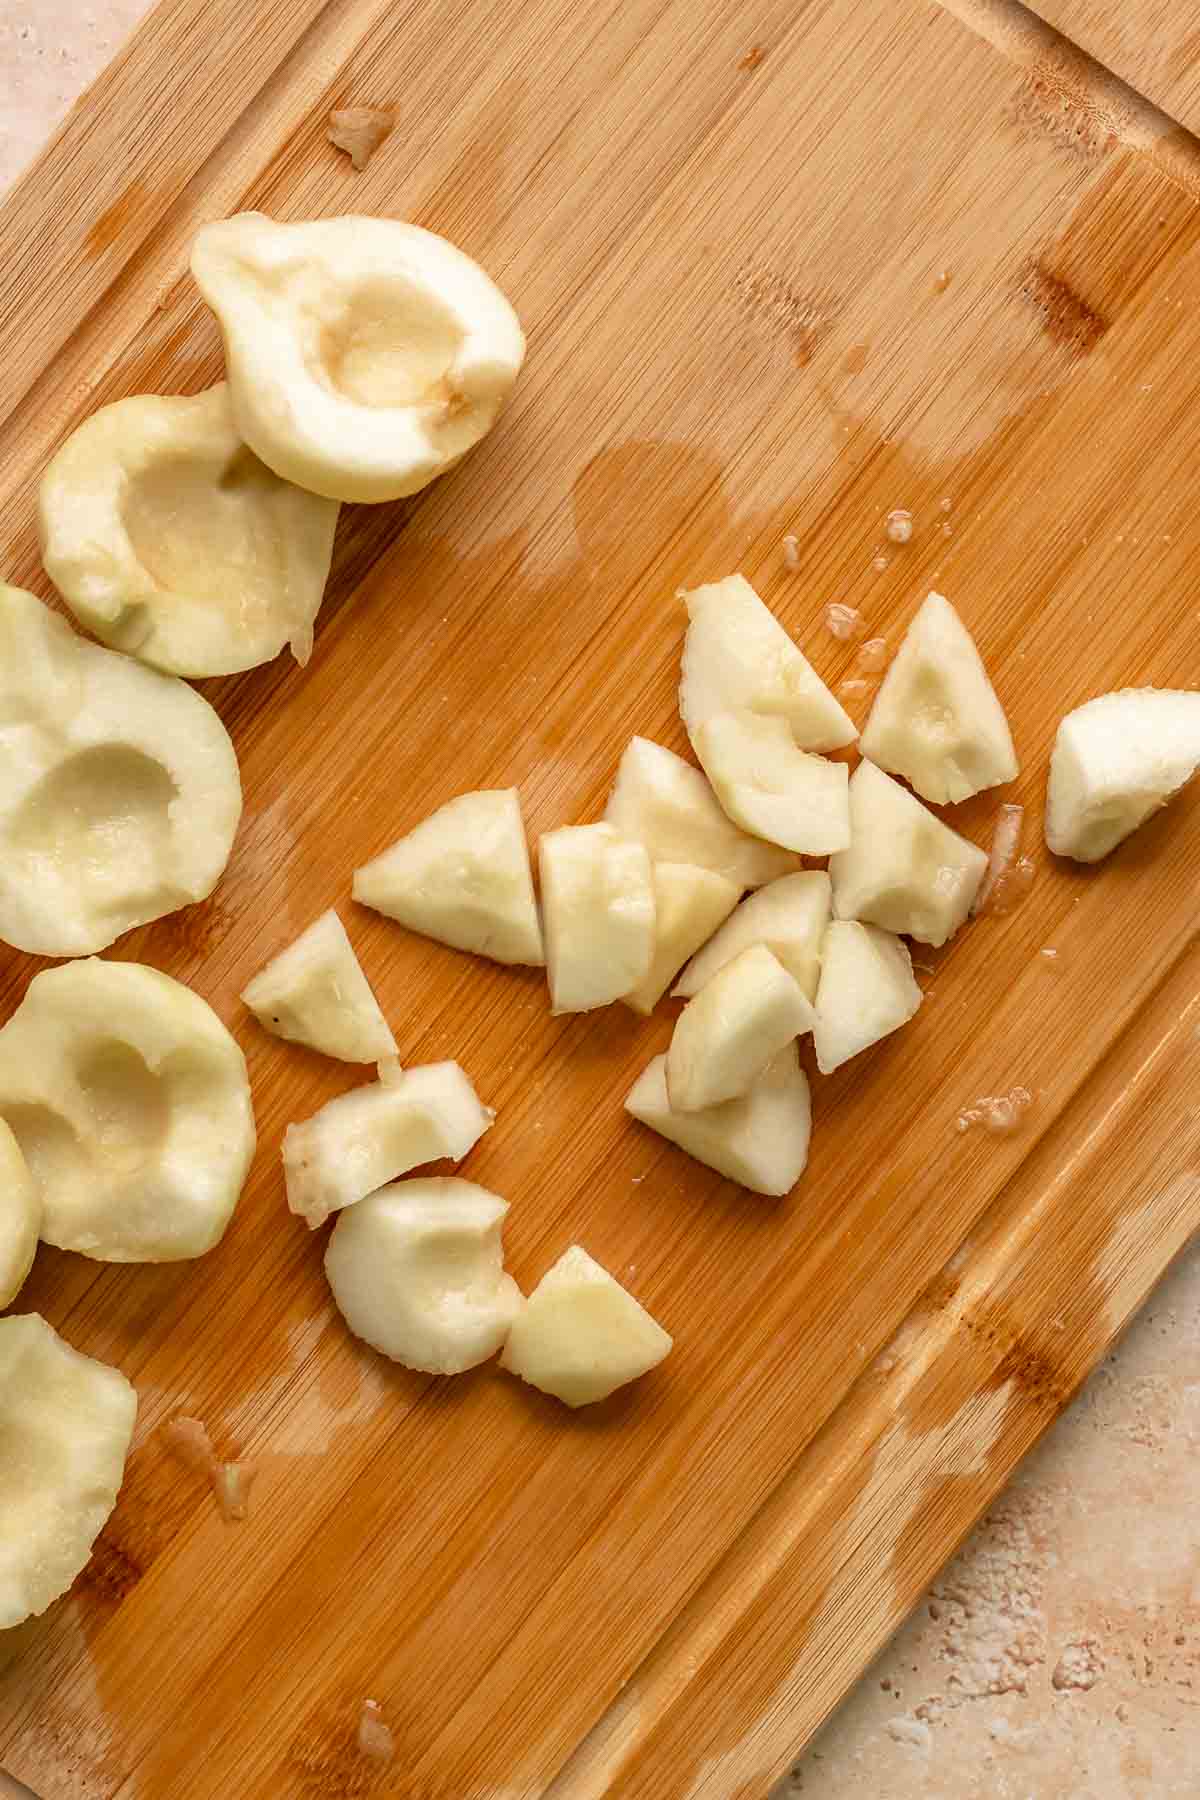 Chopped pears on a cutting board.